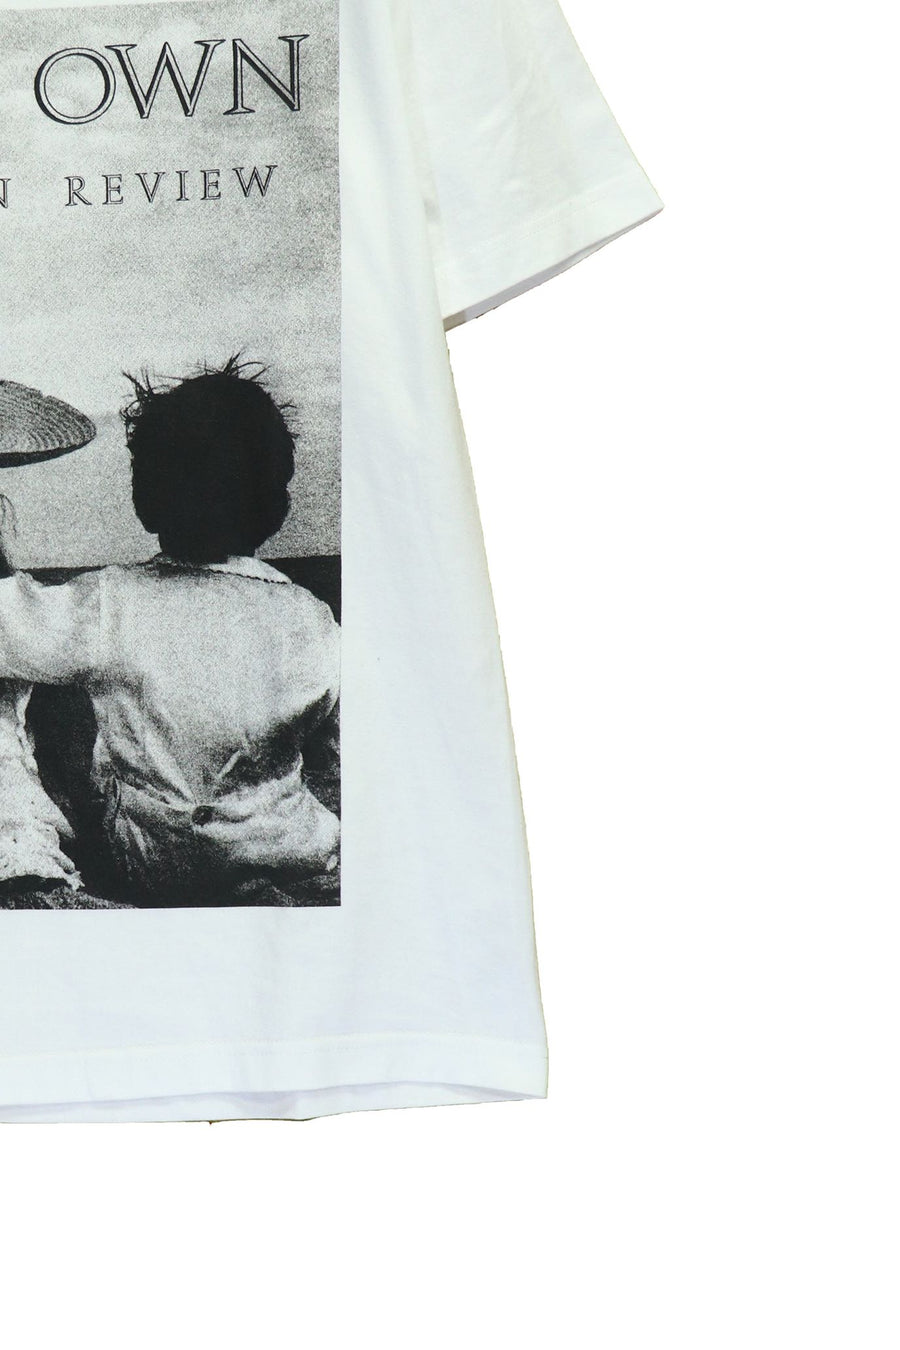 TOGA VIRILIS  Print T-shirt BOY&GIRL BOY'S OWN SP(WHITE)